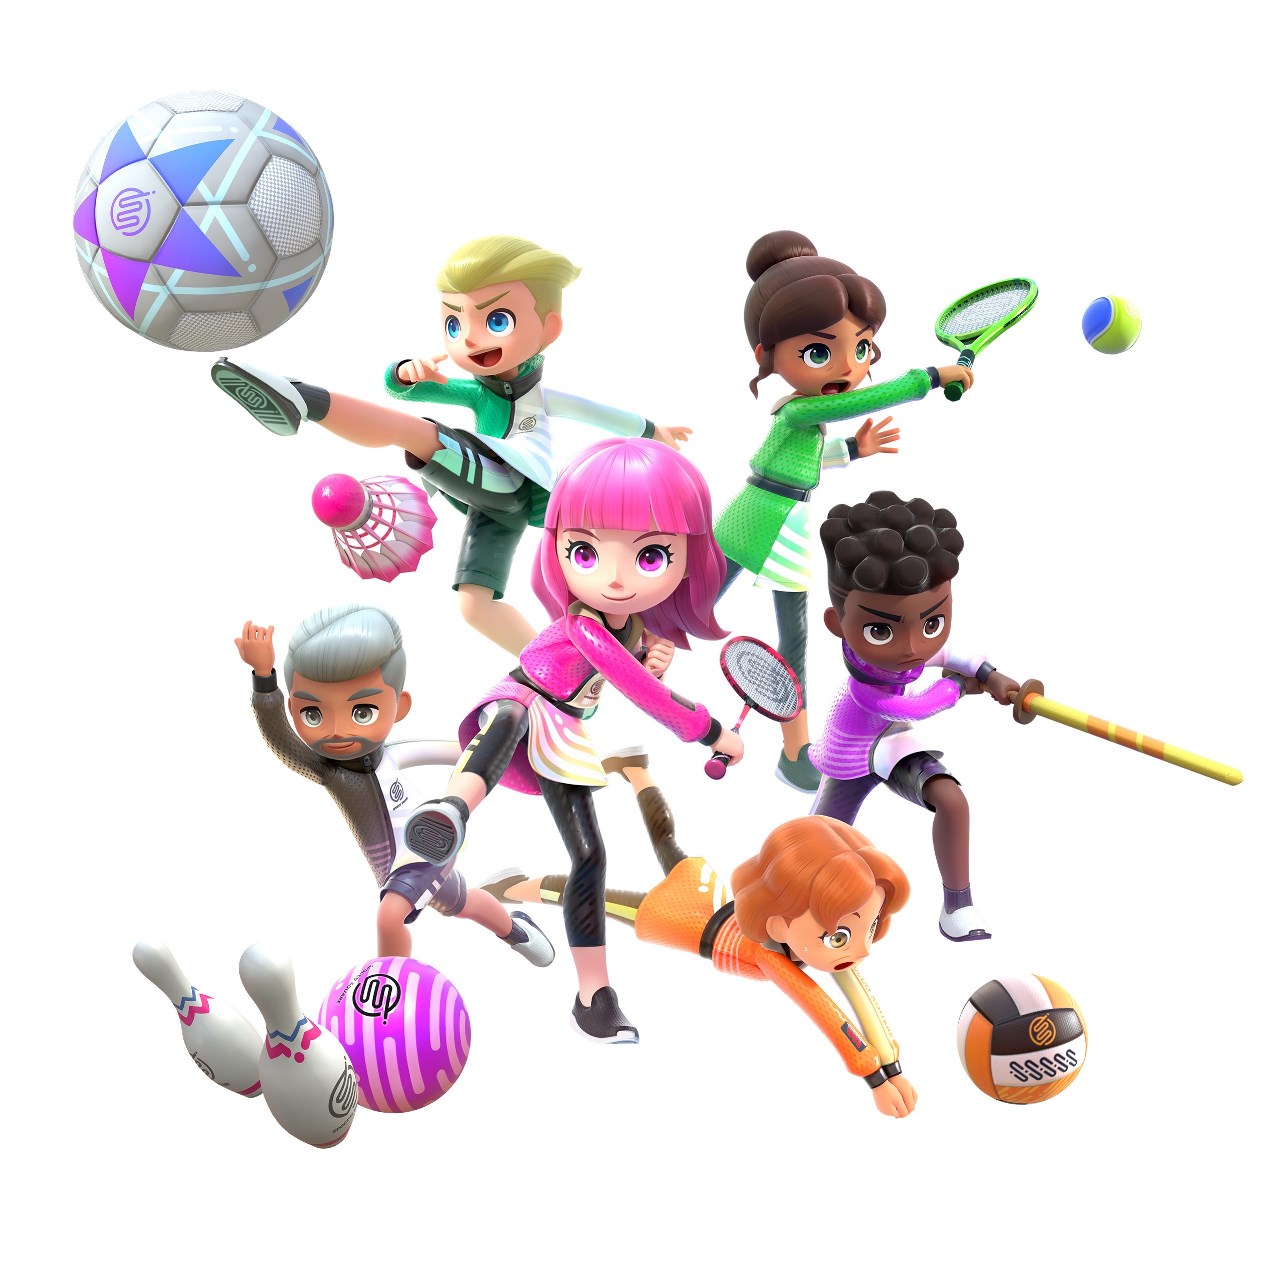 Nintendo Switch Sports screenshots and art